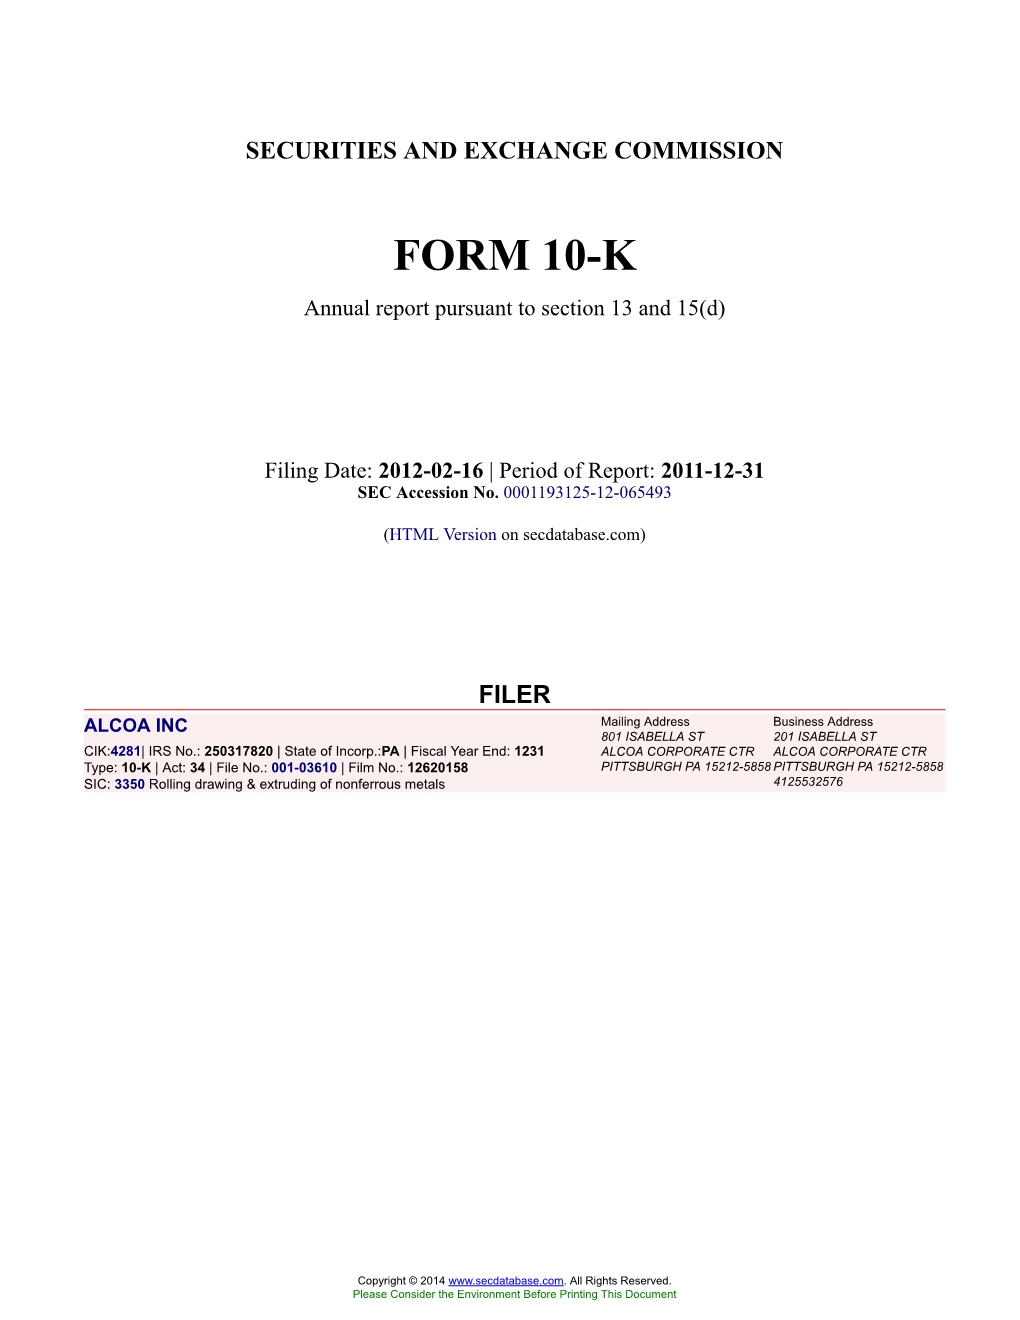 ALCOA INC Form 10-K Annual Report Filed 2012-02-16